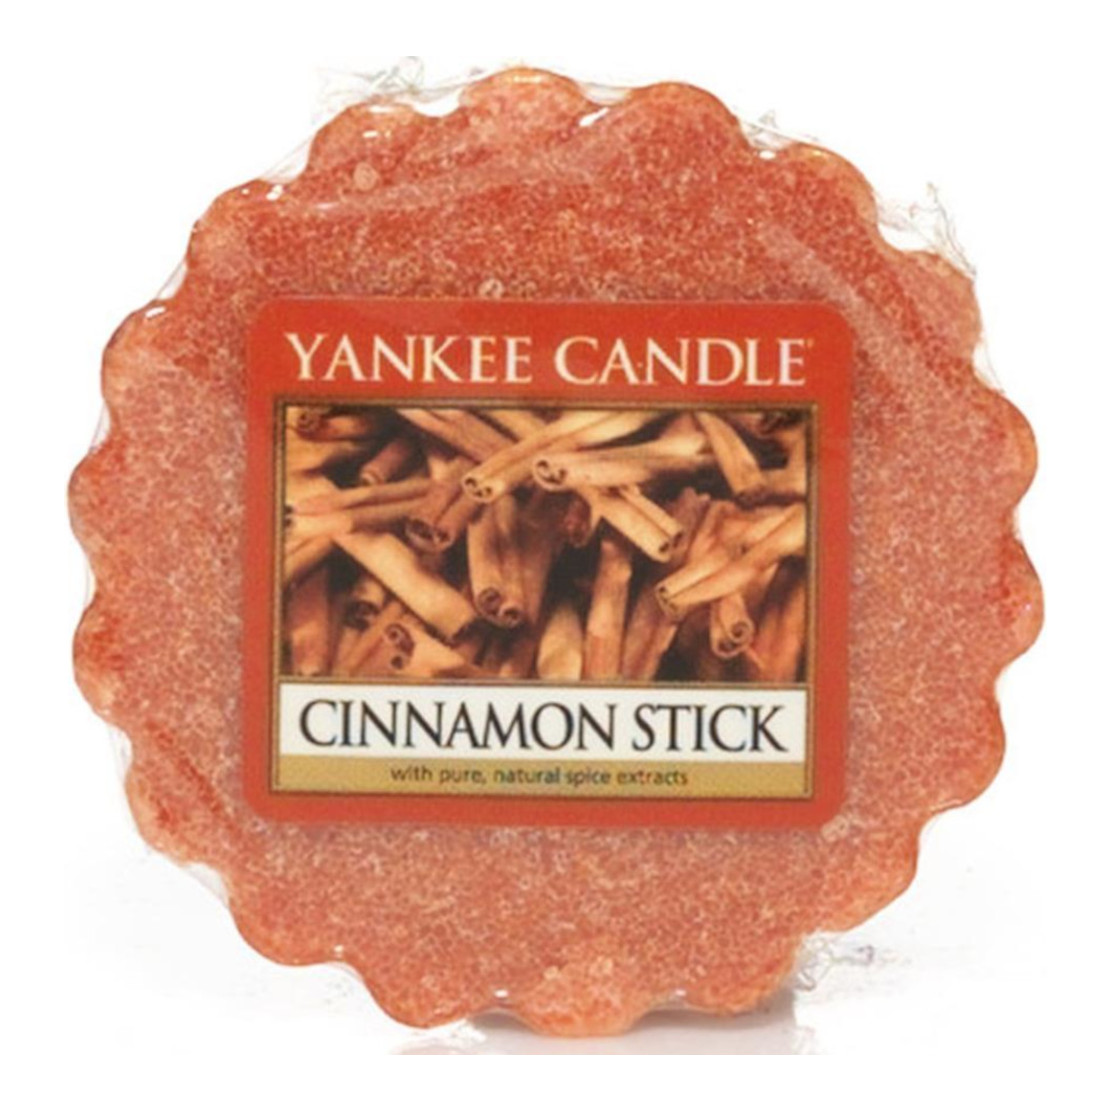 Yankee Candle Cinnamon Stick Wax Melt Tart